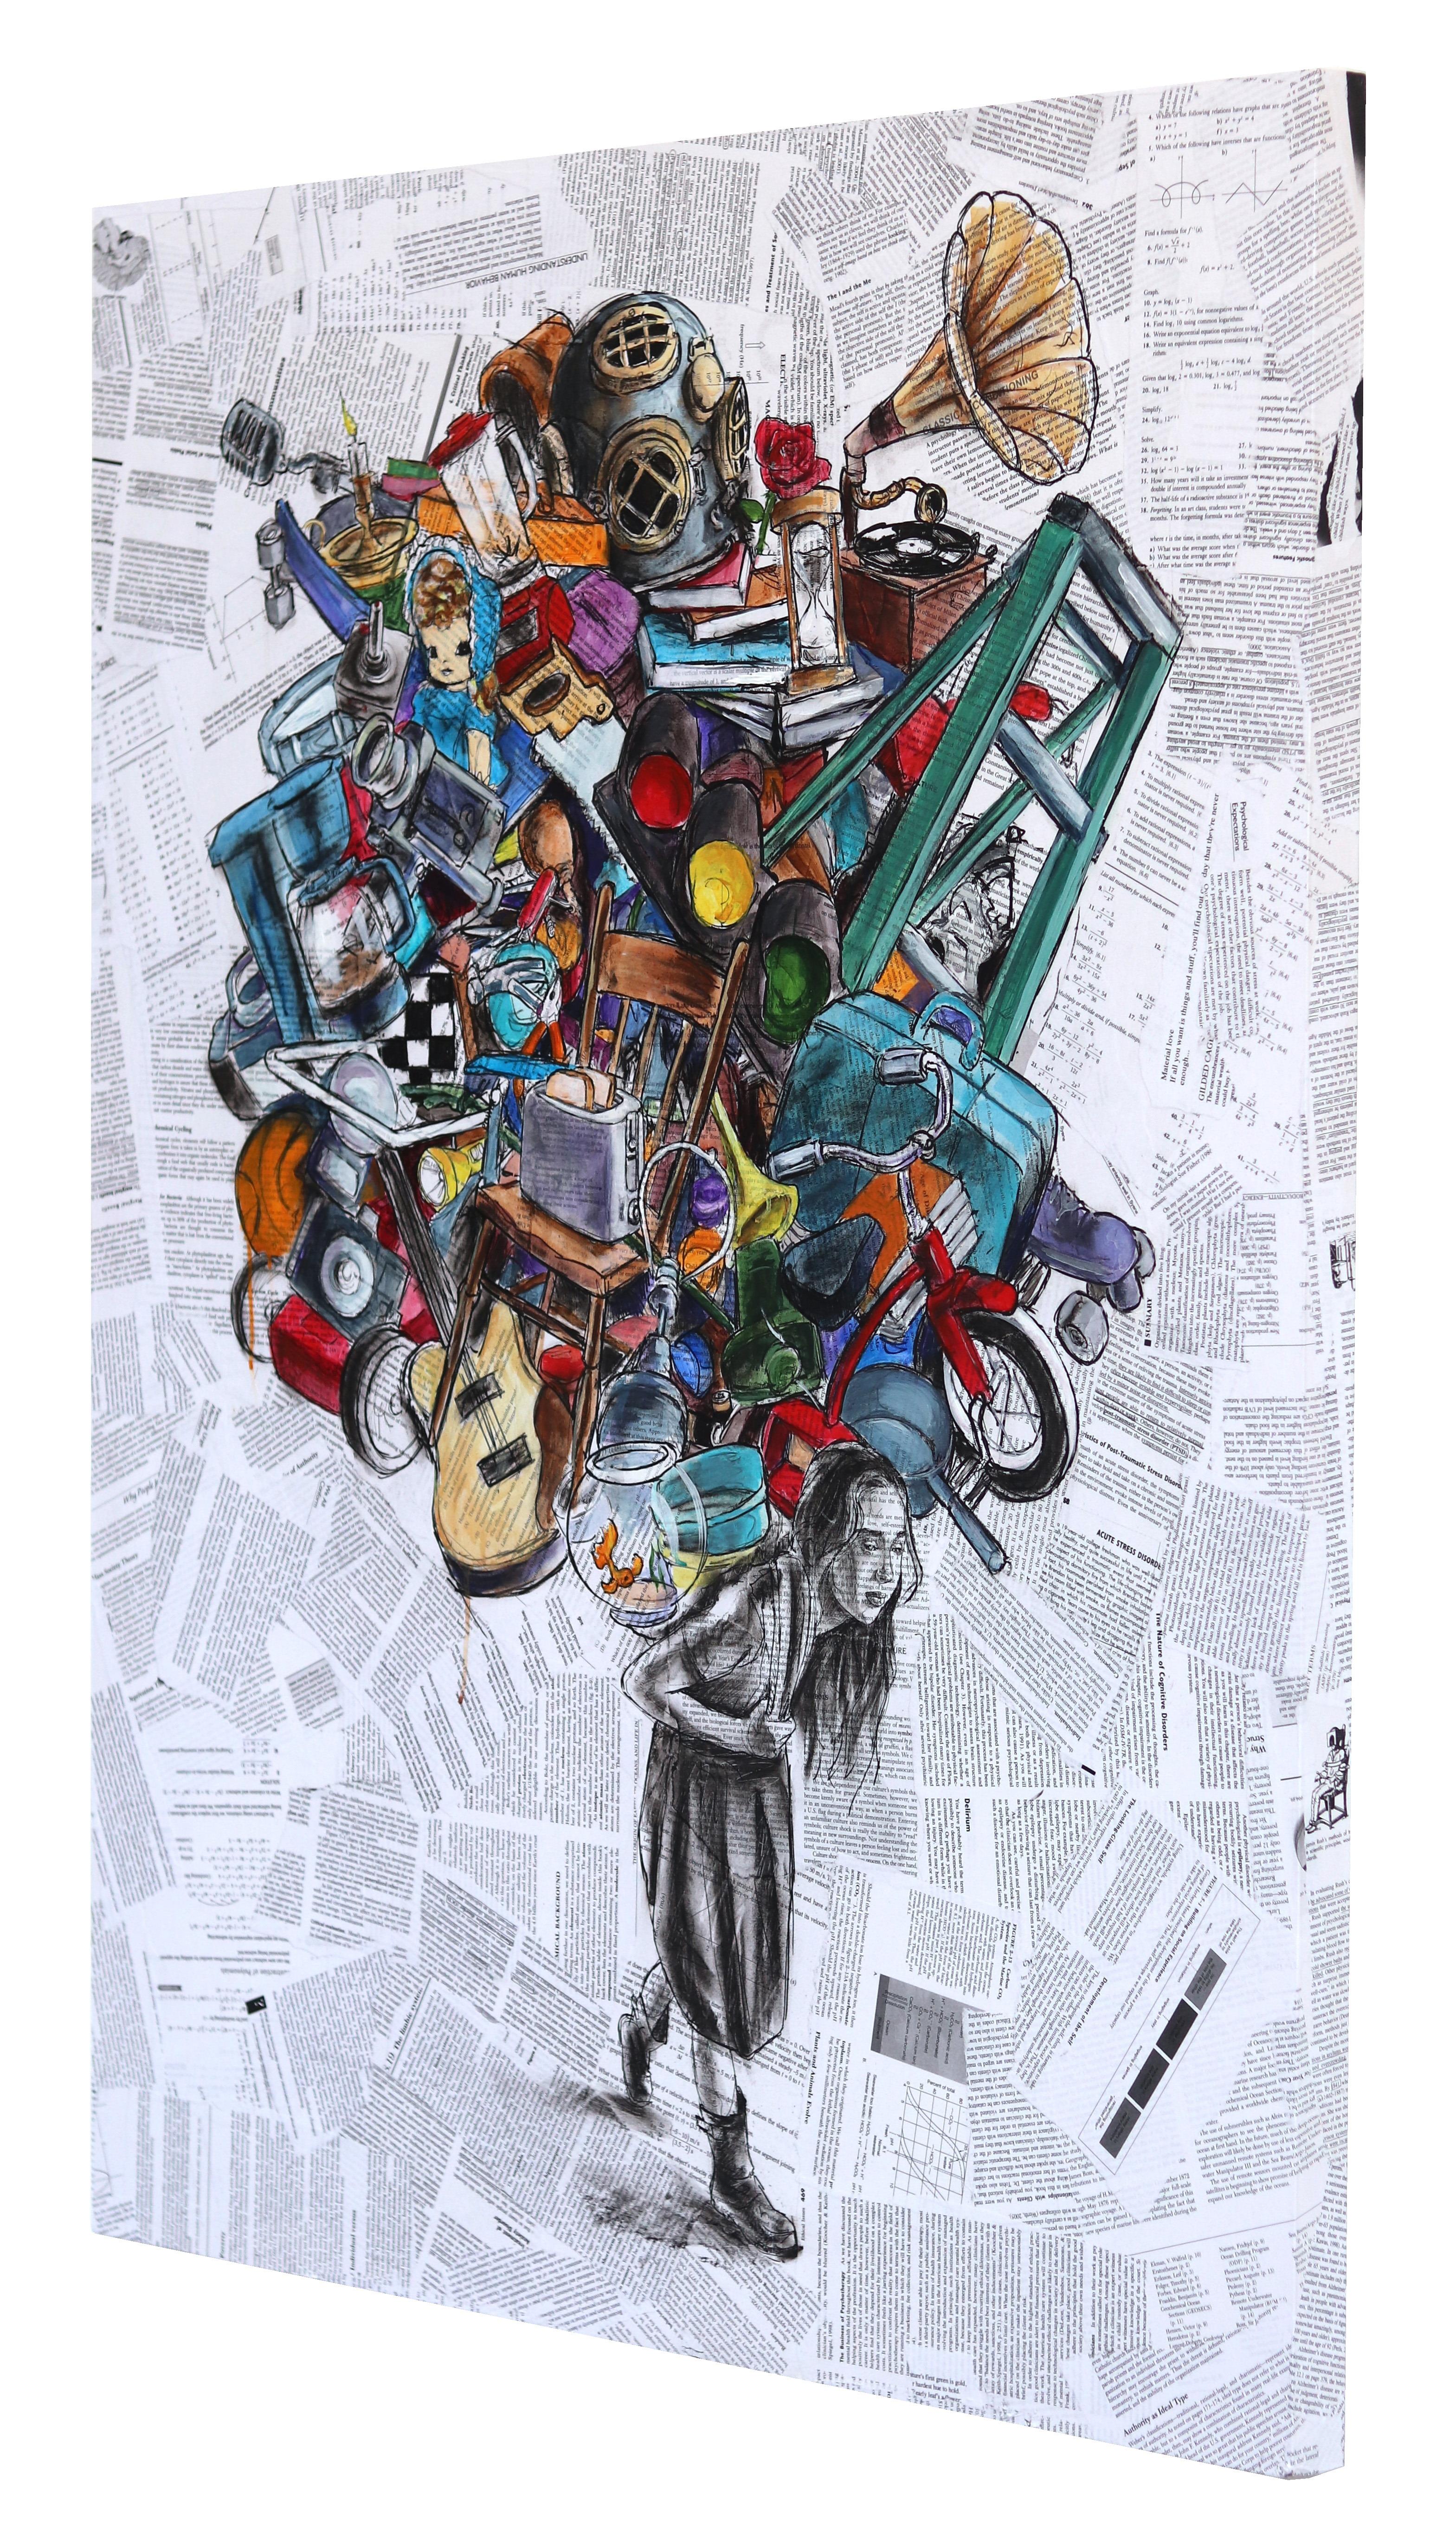 Work In Progress - Pop Art Mixed Media Art by Robert Lebsack